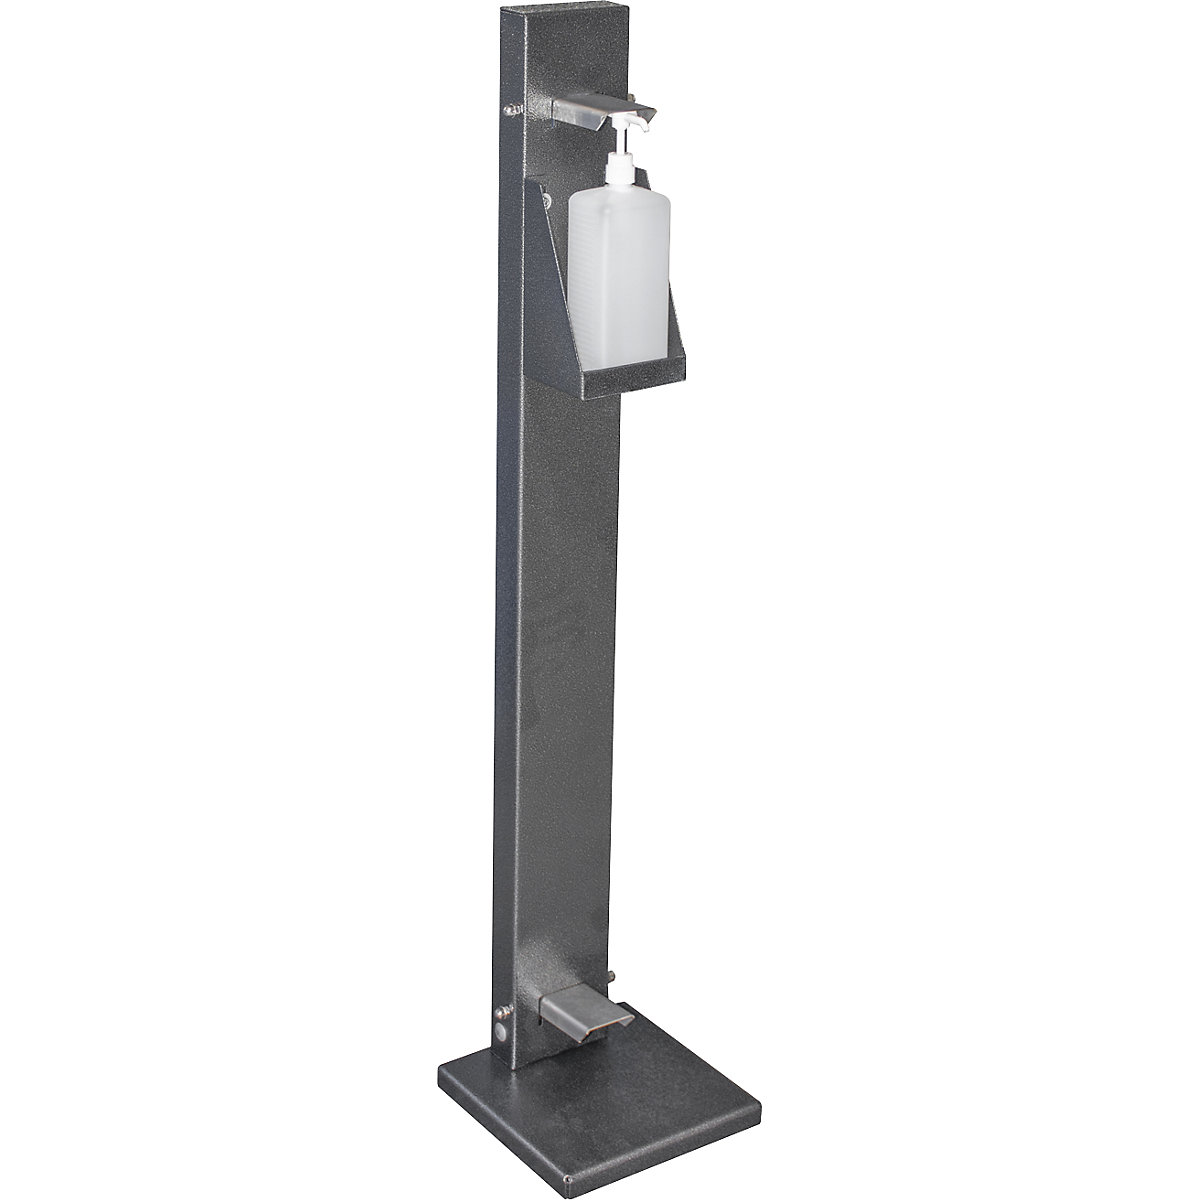 Pedal disinfectant/soap dispenser stand – eurokraft pro